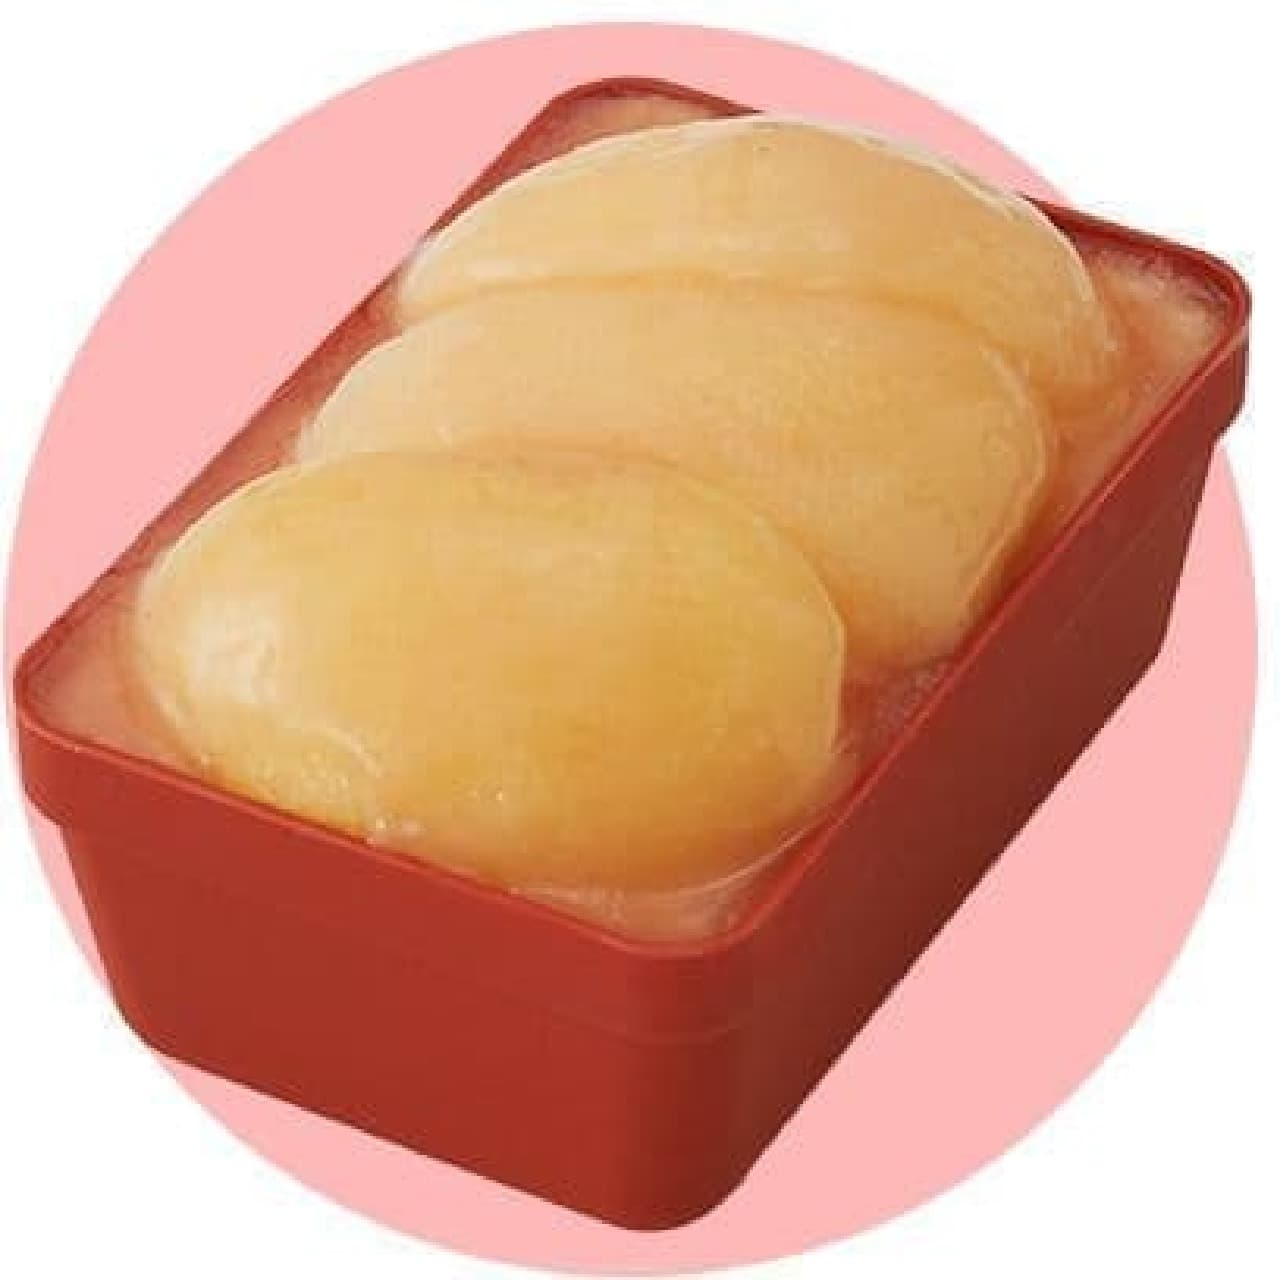 LeTAO "Hinamatsuri Sweets Box"